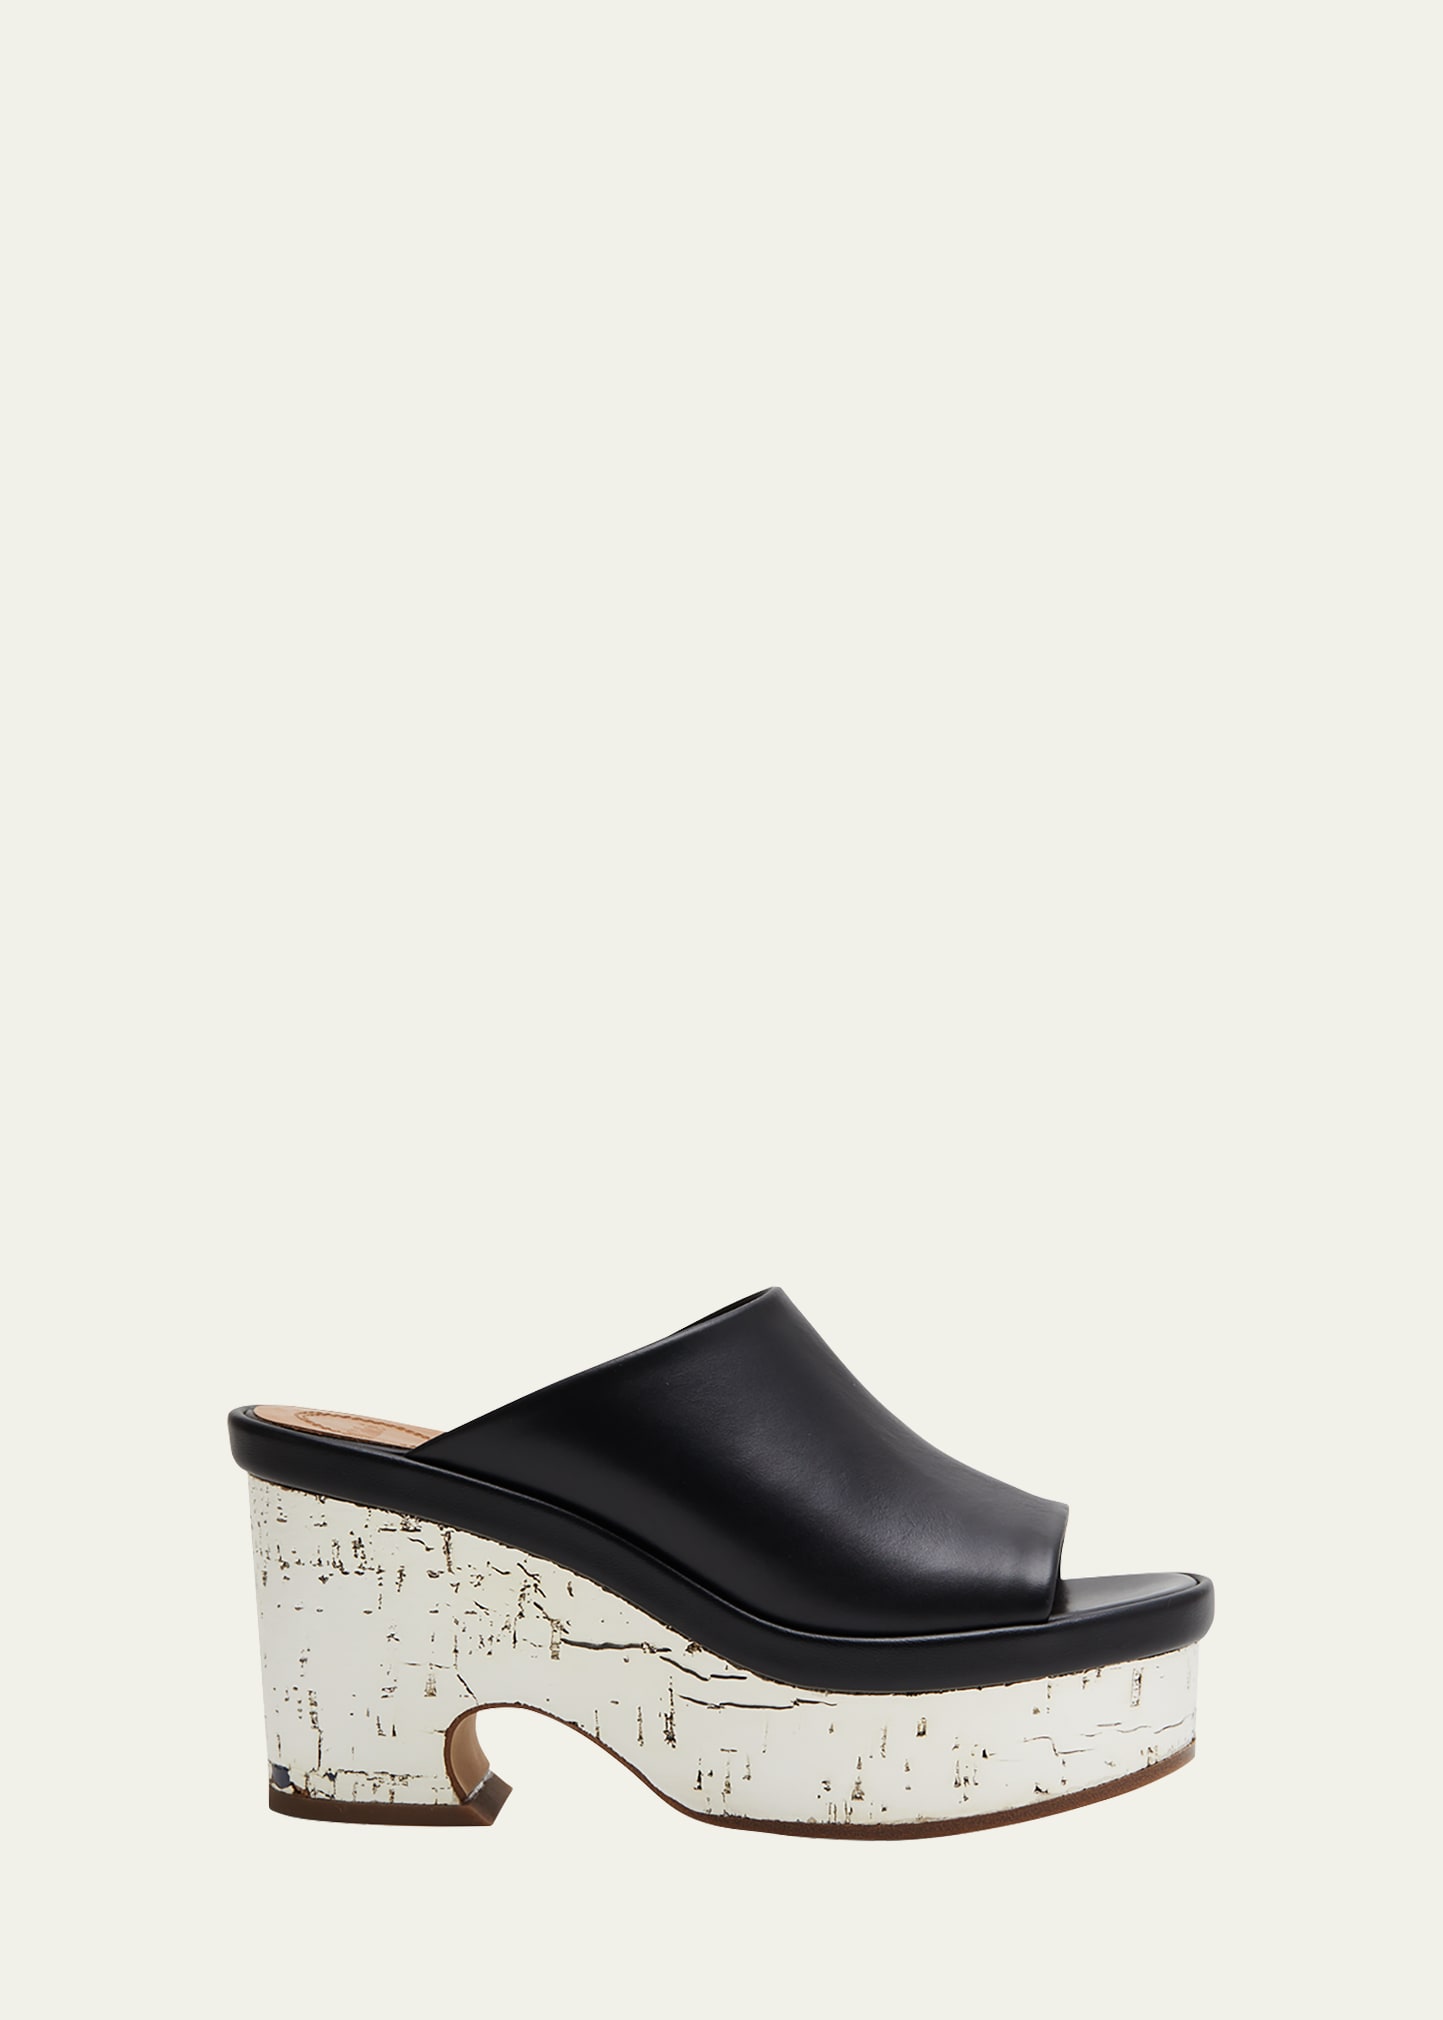 Chloe Oli Platform Open-Toe Leather Mule Sandals